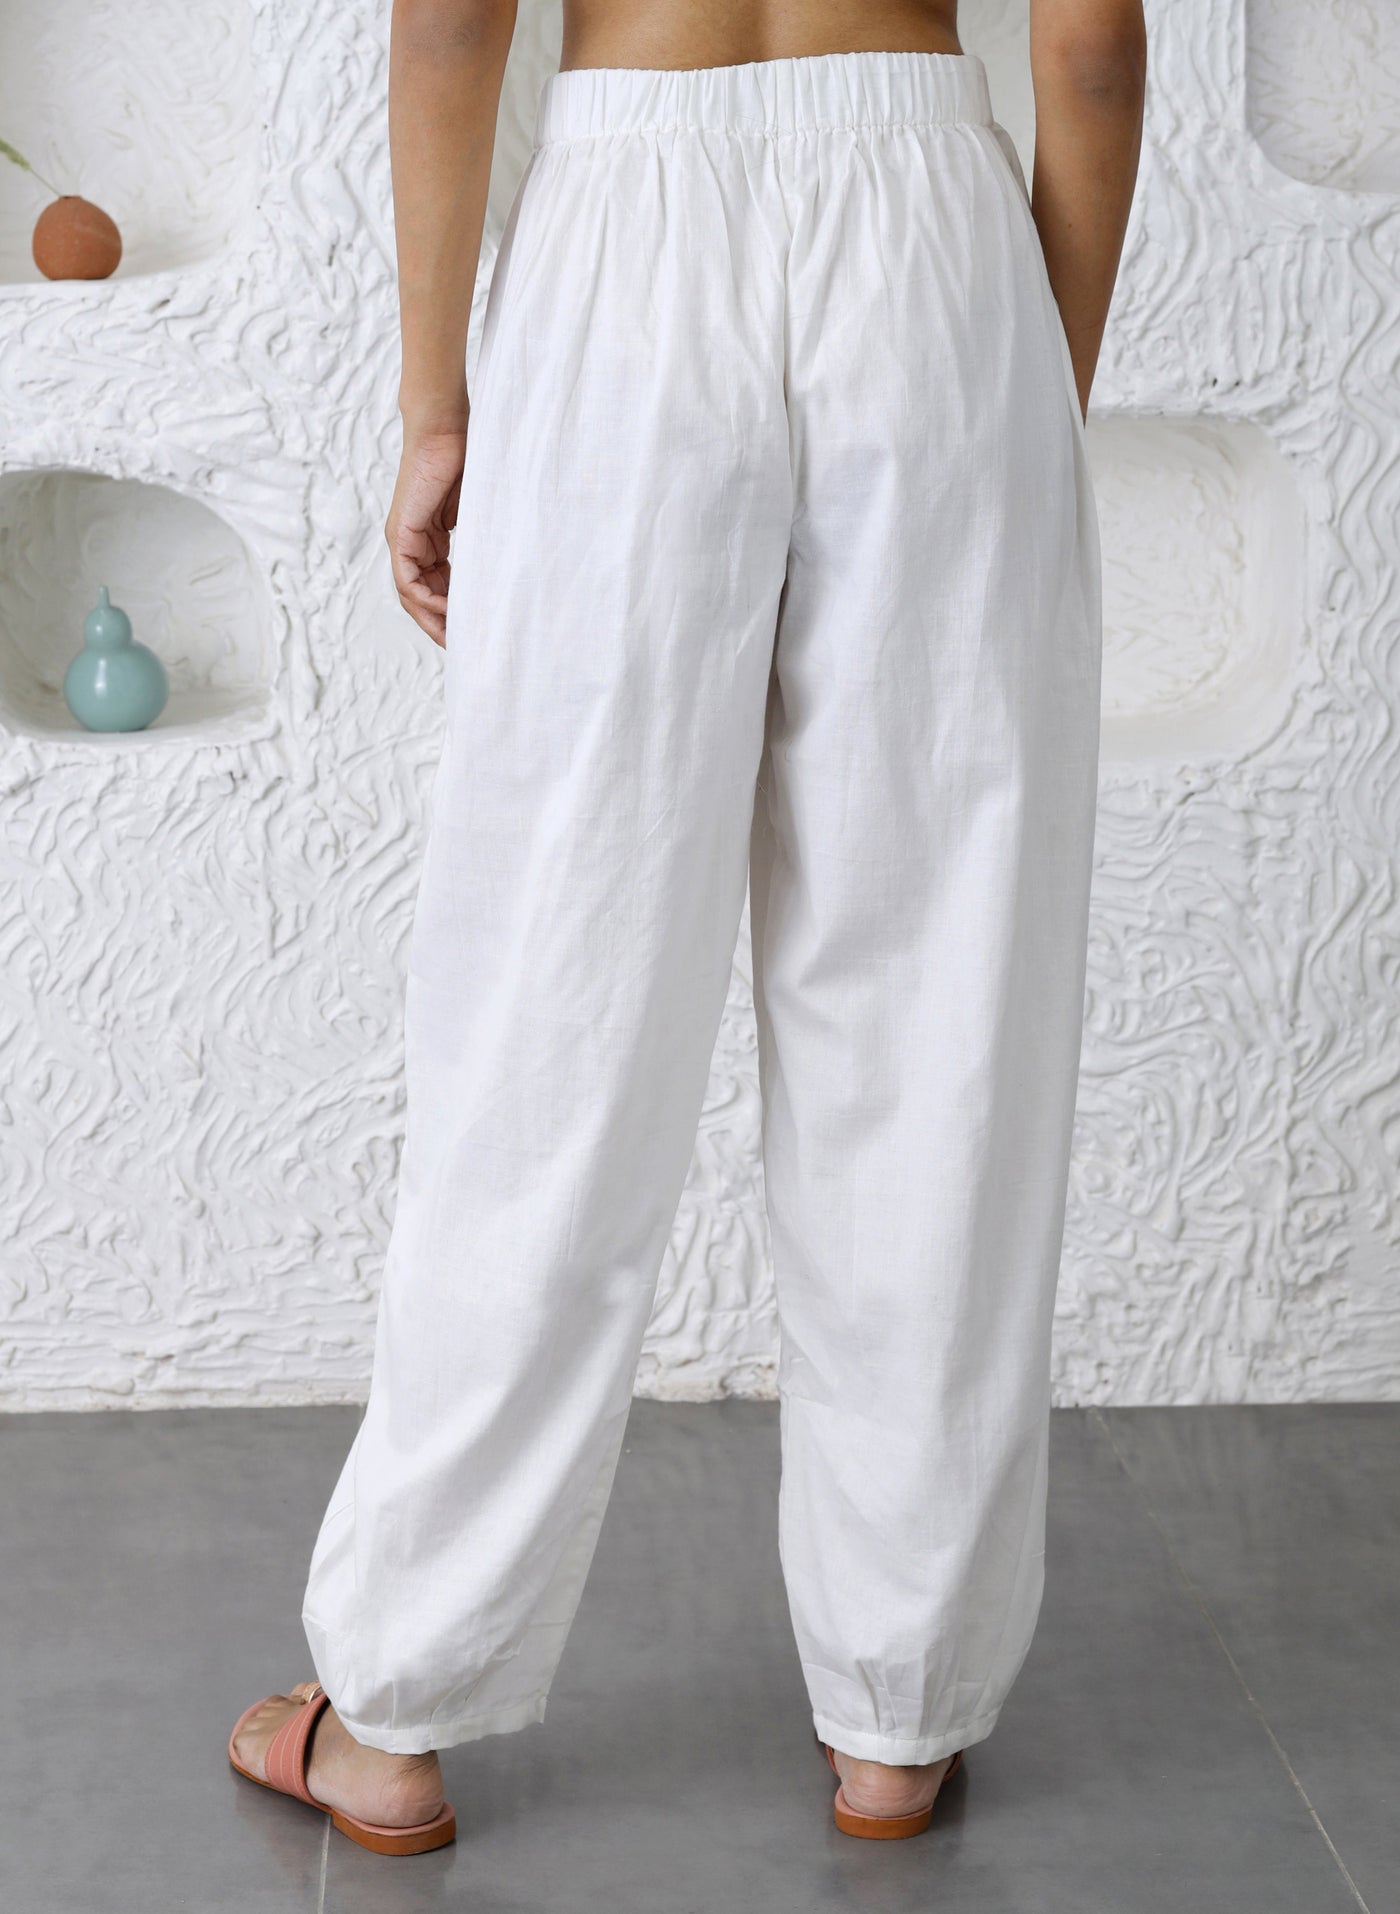 Kora Cotton Pants for Women